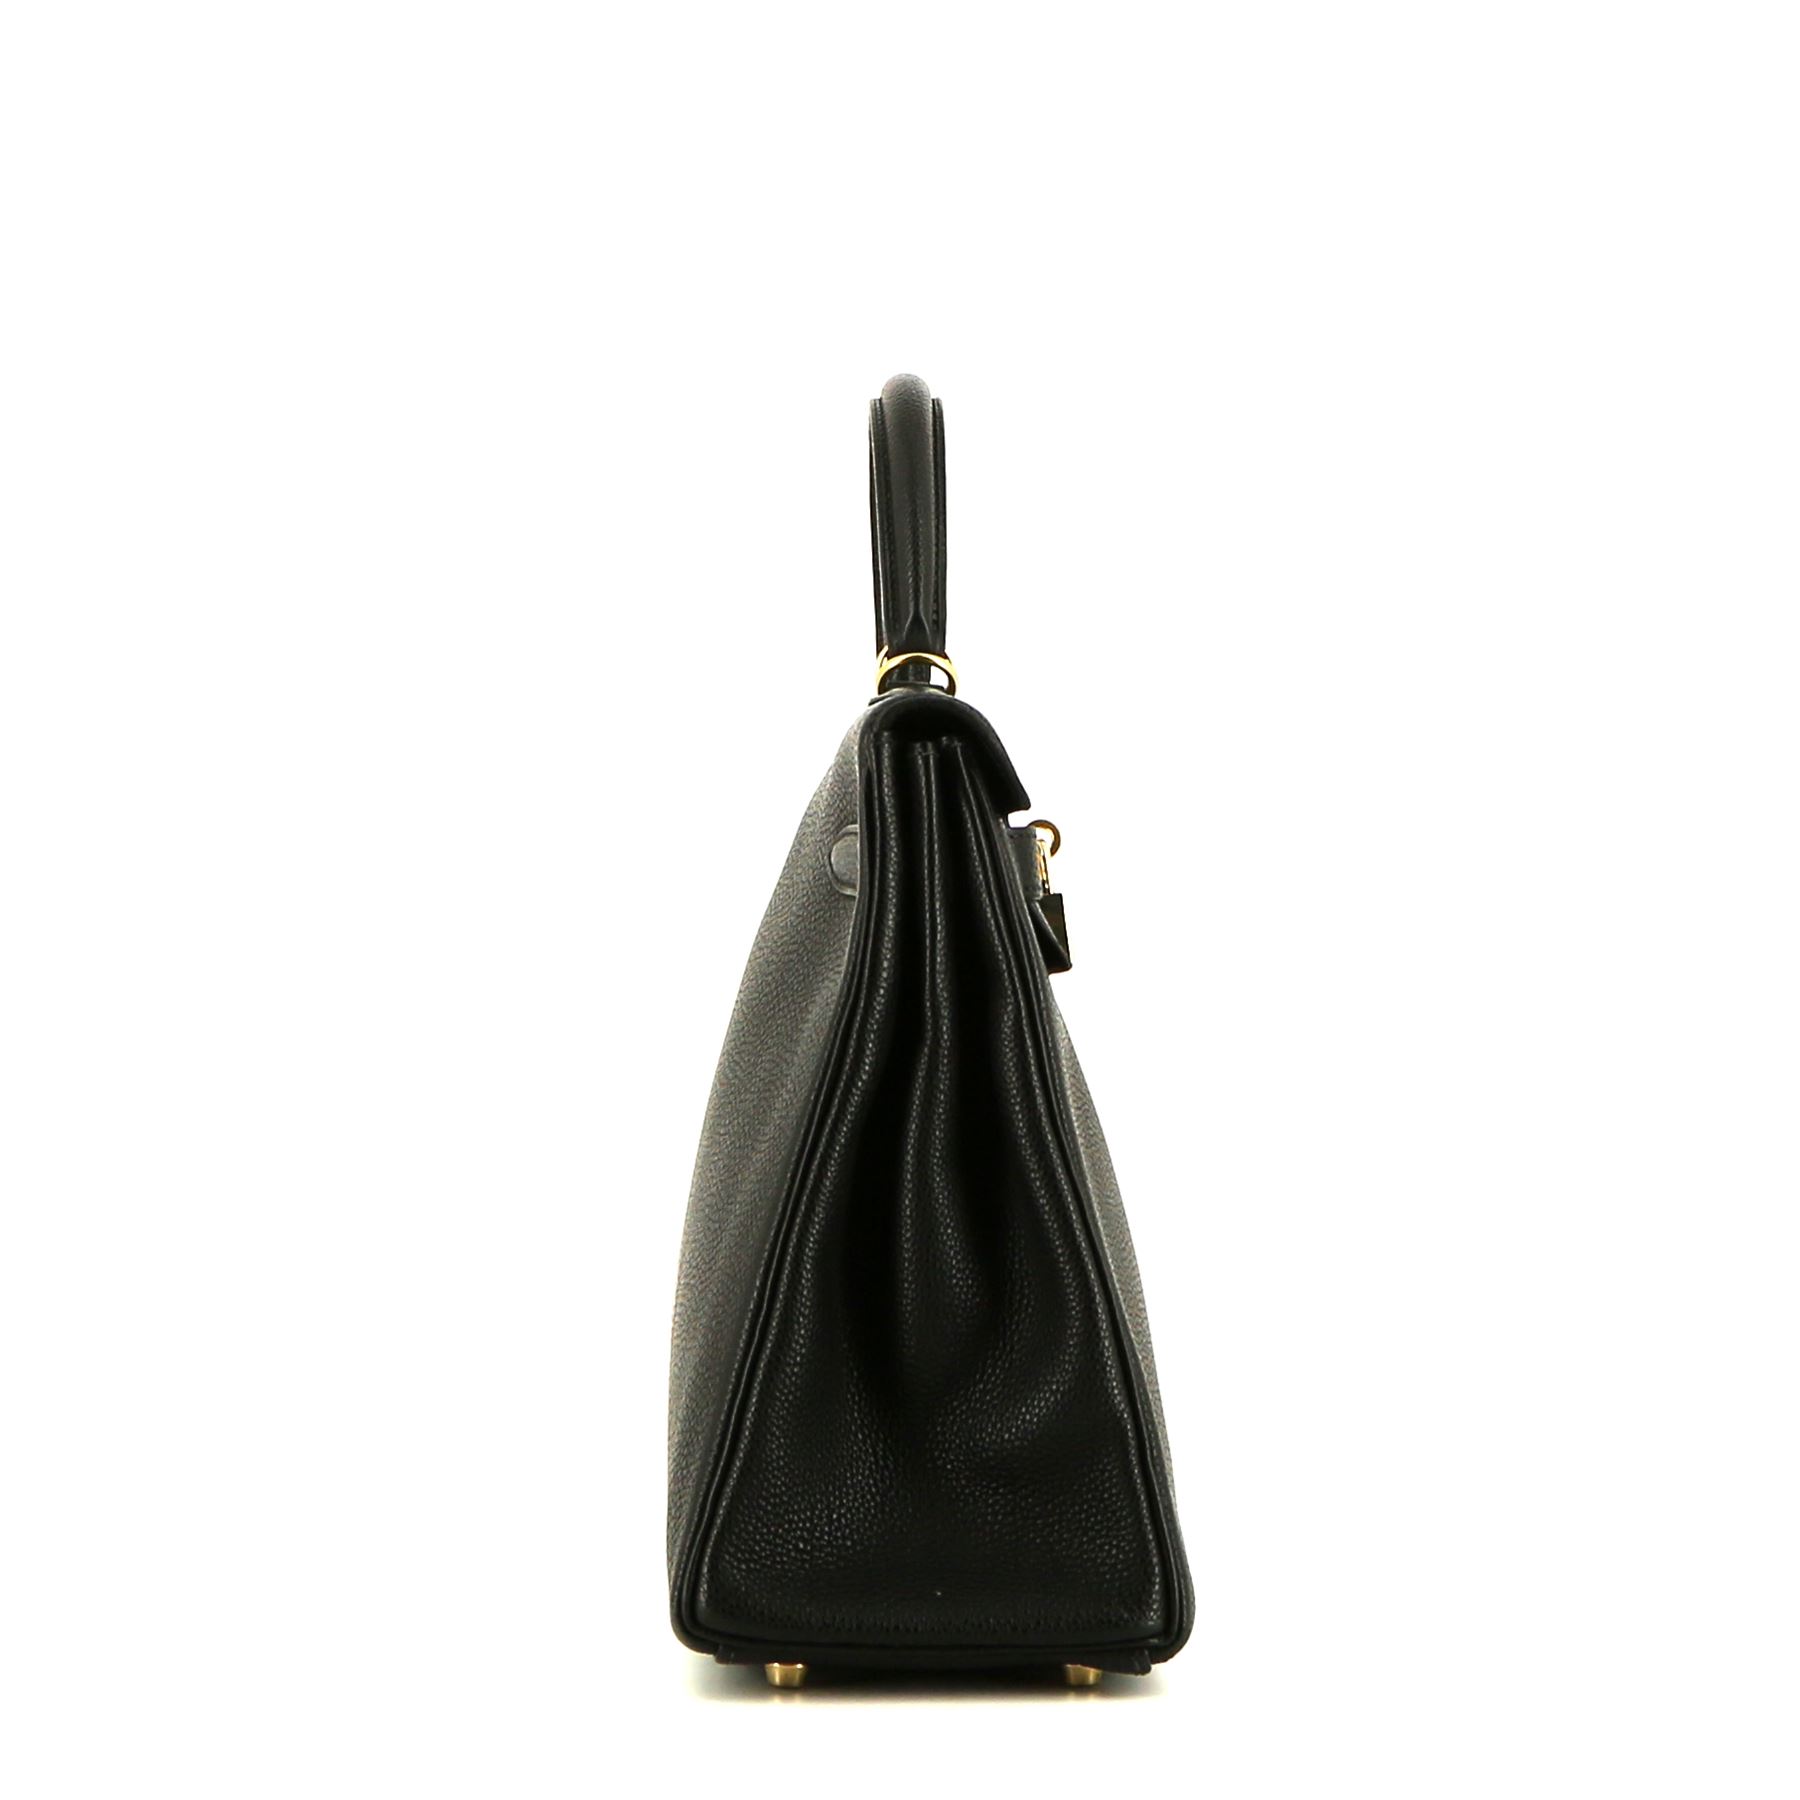 Kelly 32 cm Handbag In Black Togo Leather